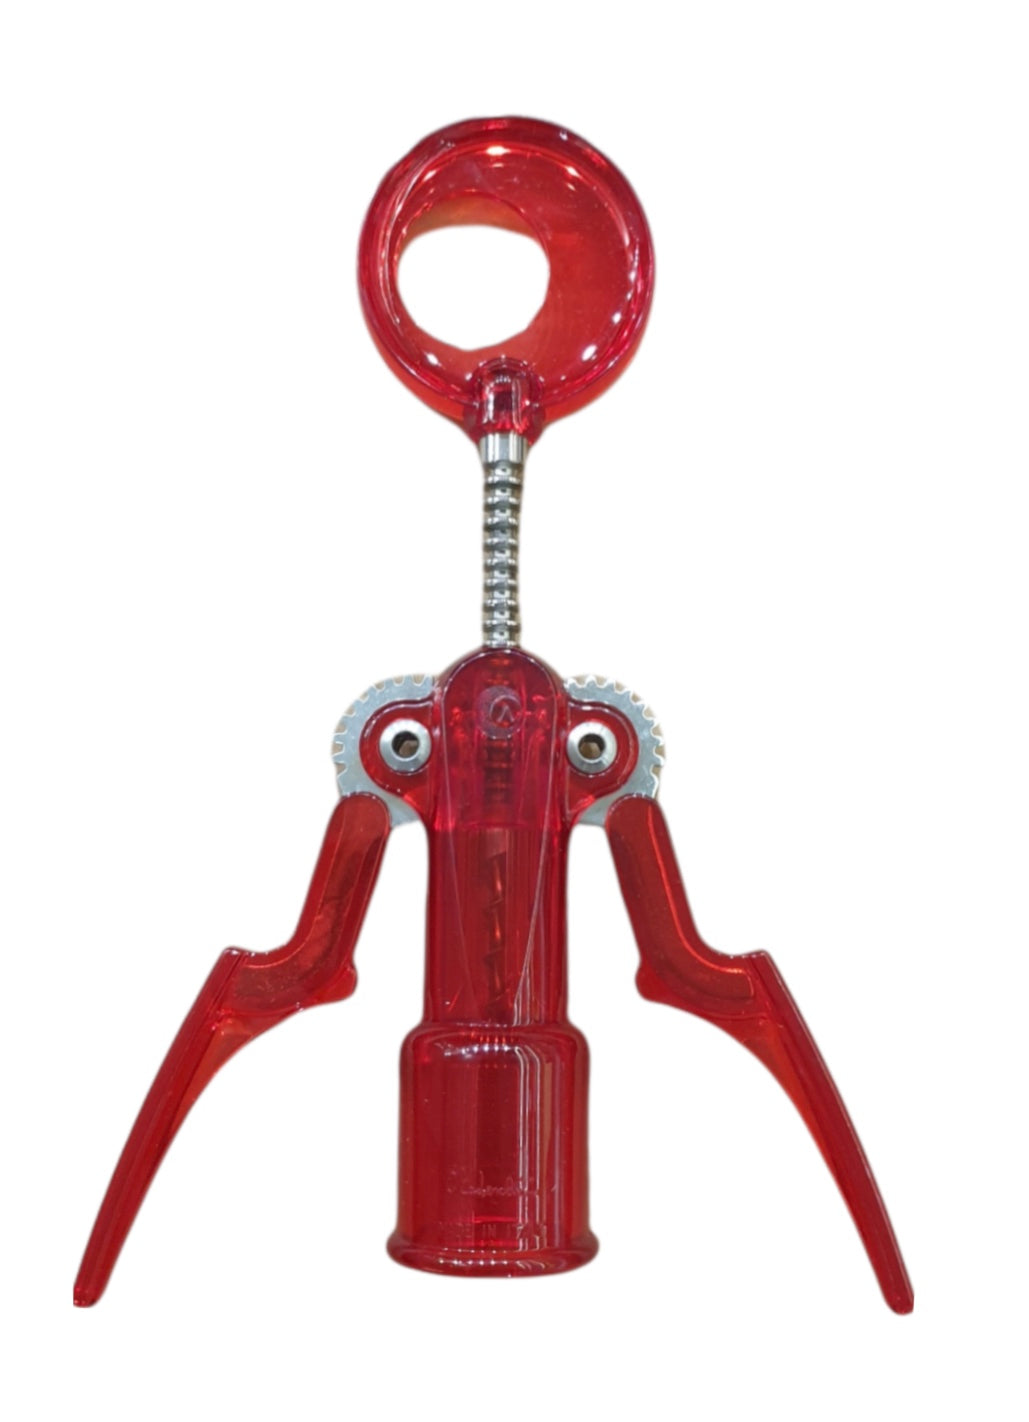 Artis Luì Practical and light transparent red corkscrew